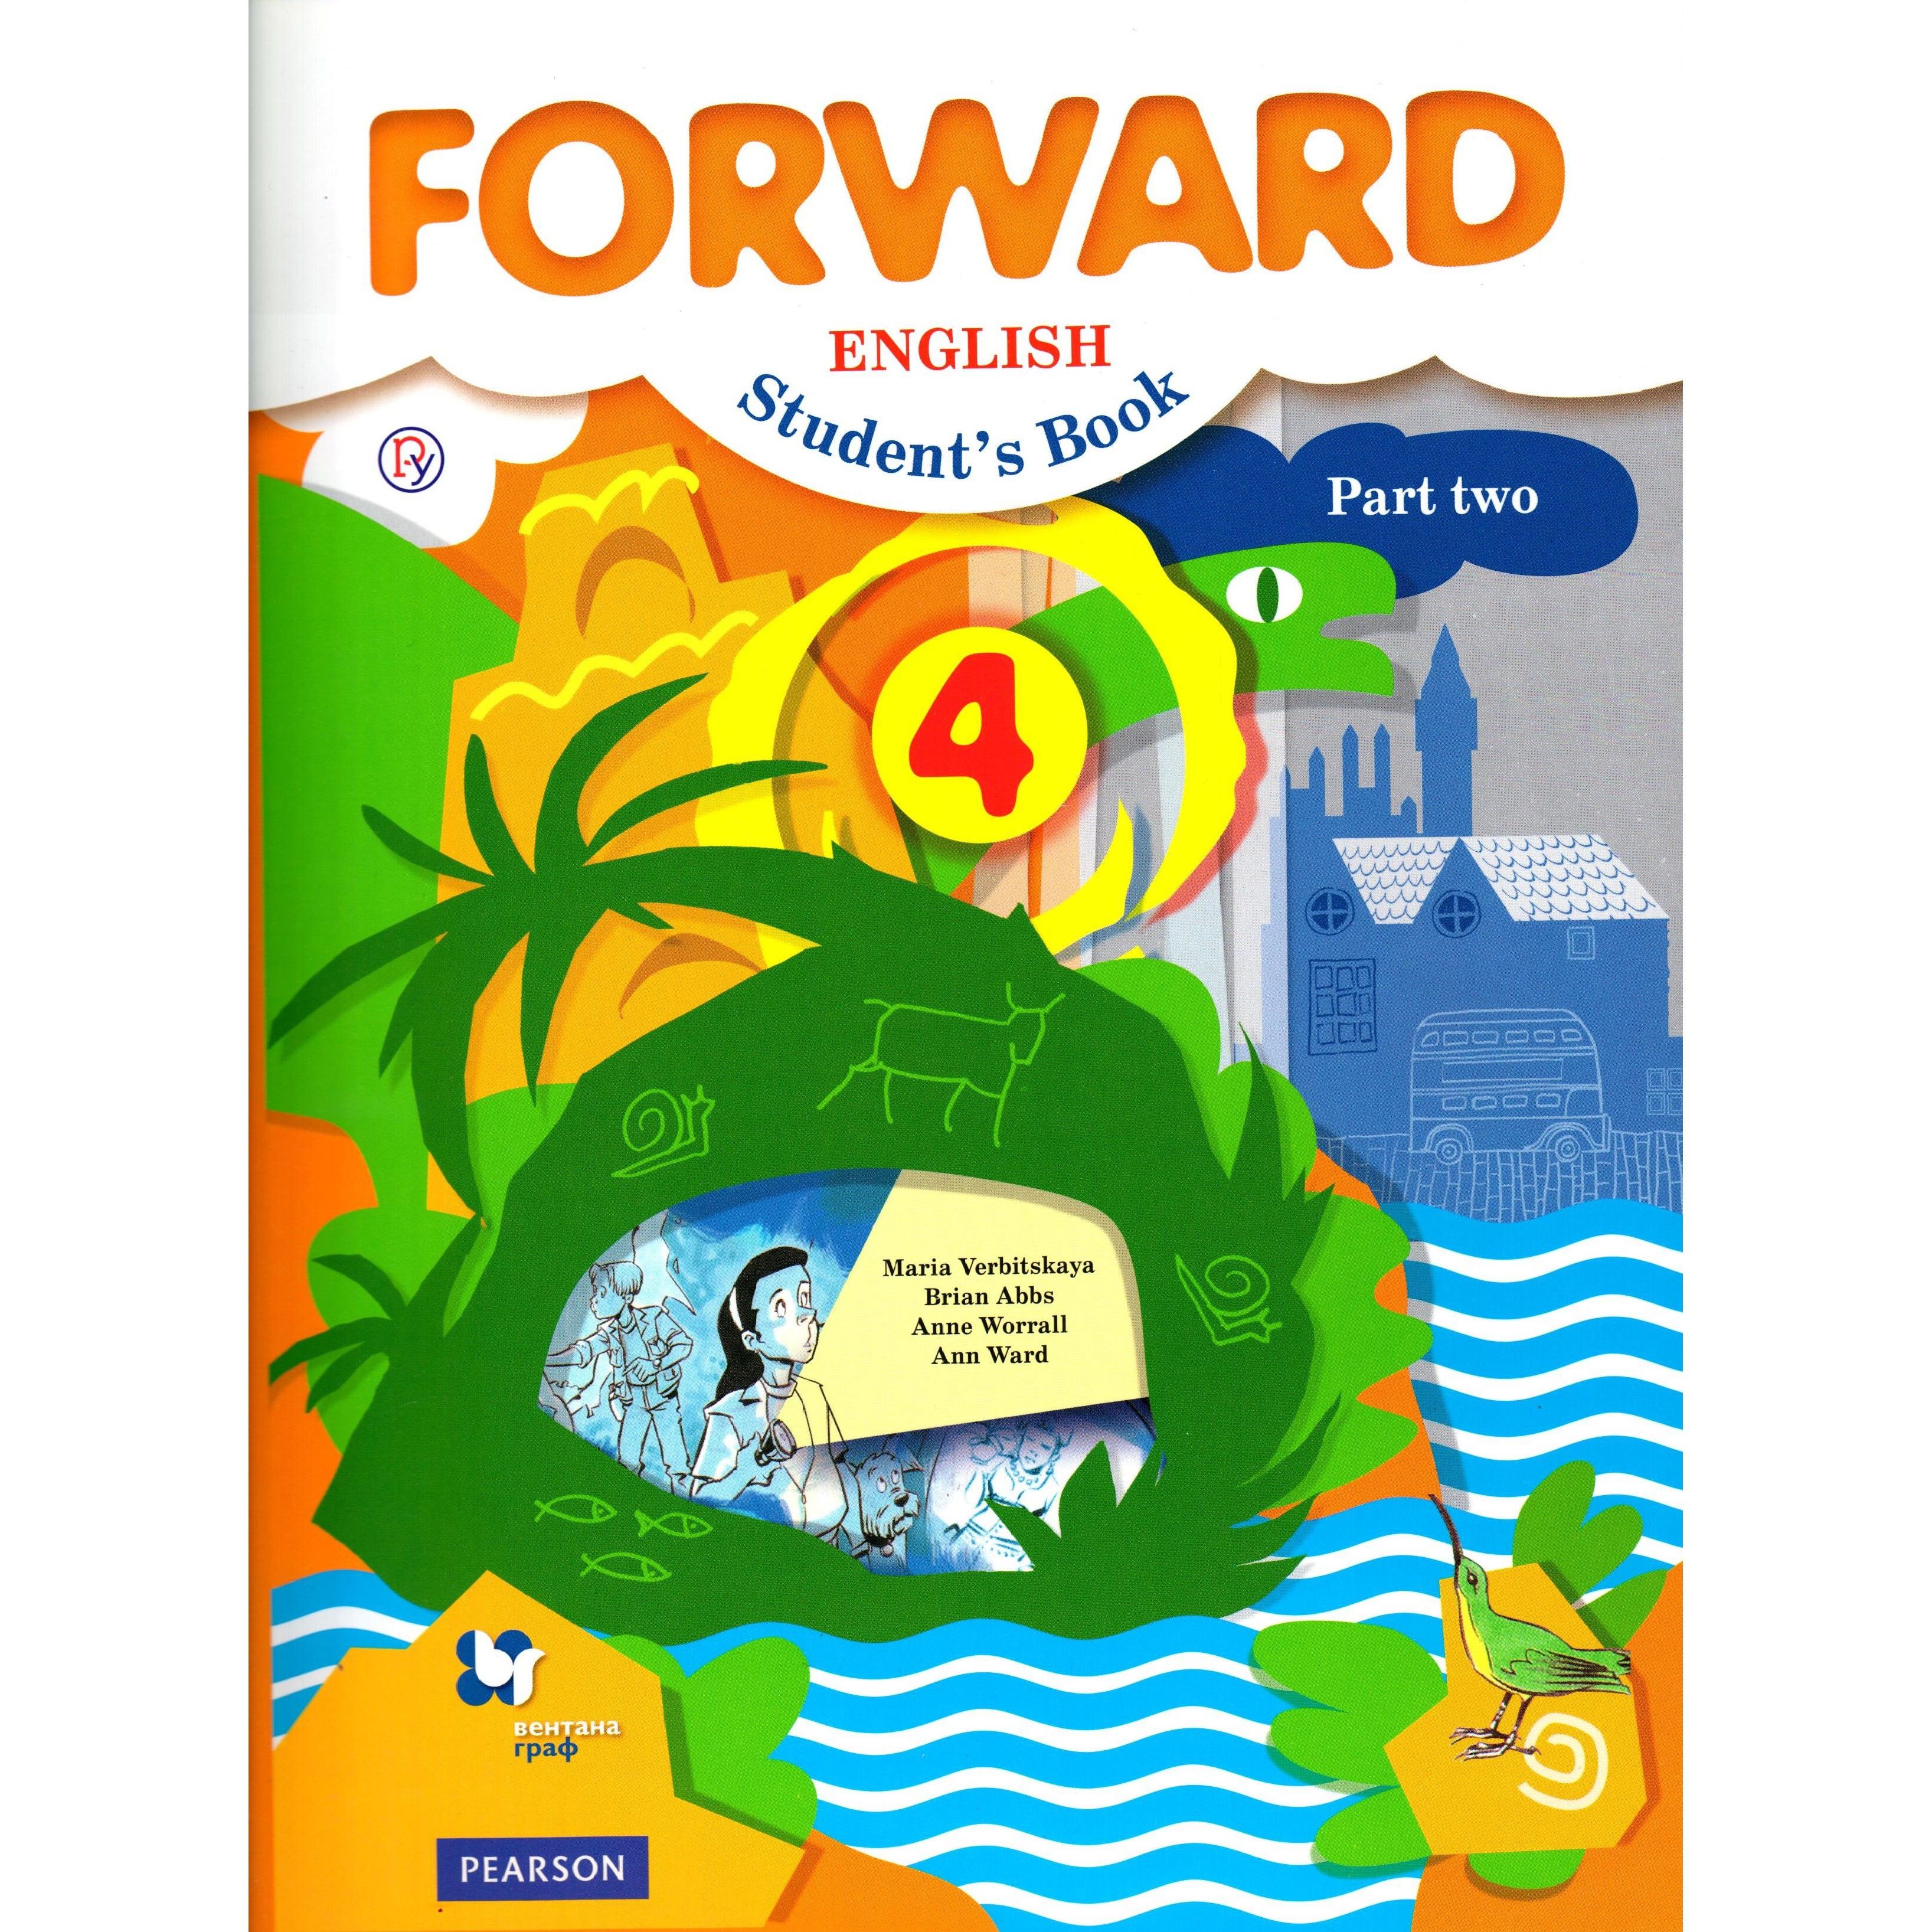 Английский maria verbitskaya. Forward 4 класс учебник. Английский язык 4 класс учебник Вербицкая.